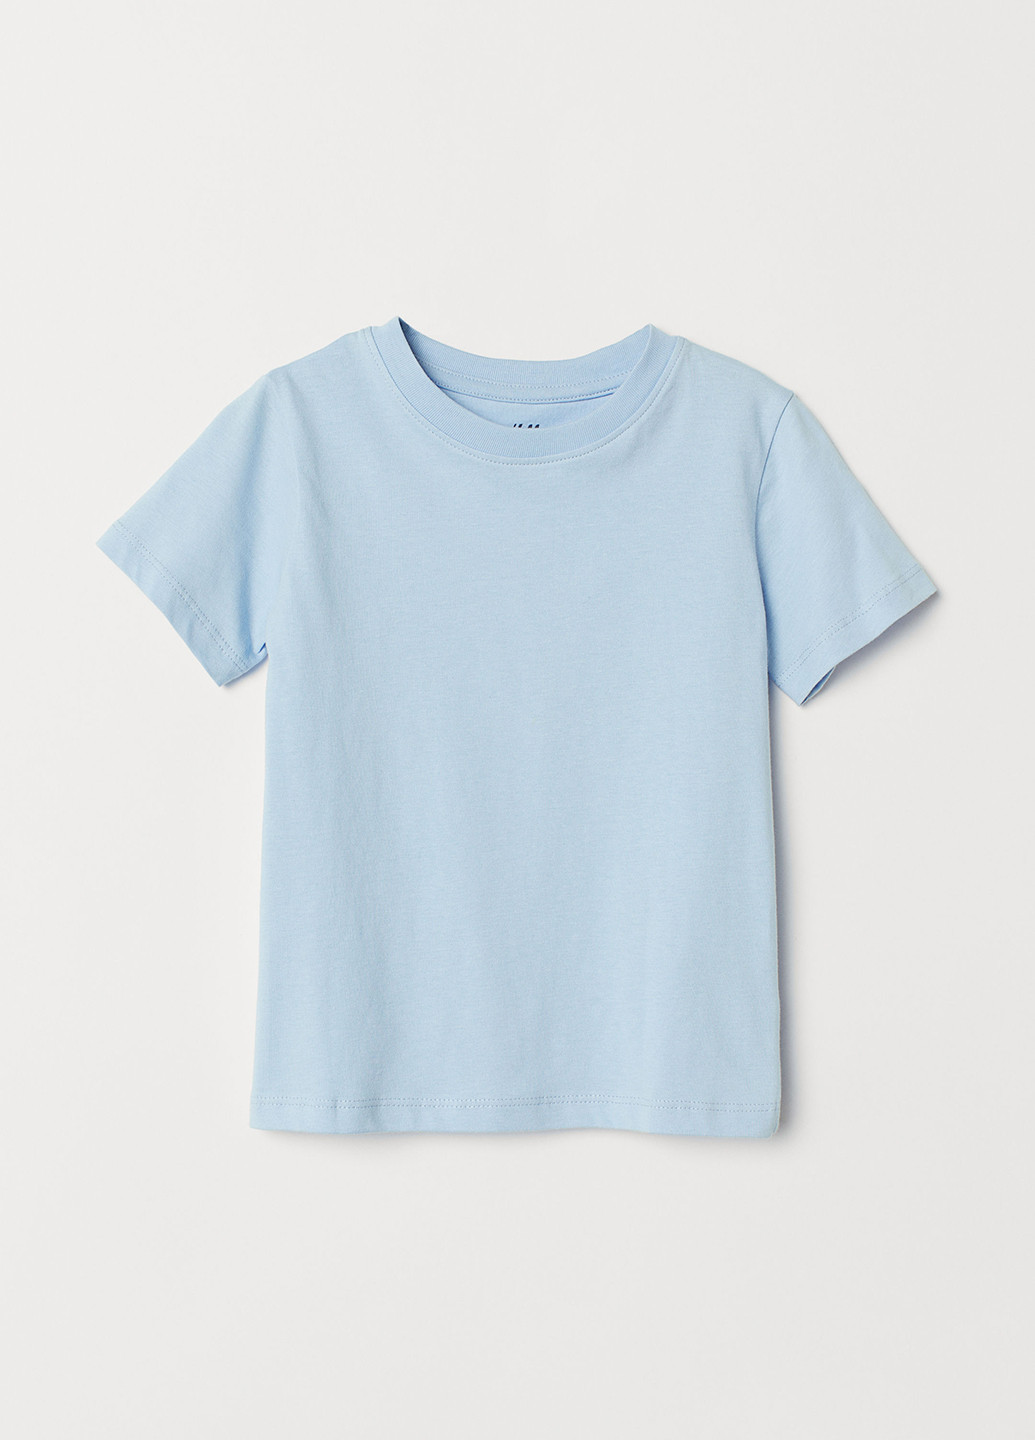 Голубая летняя футболка с коротким рукавом H&M